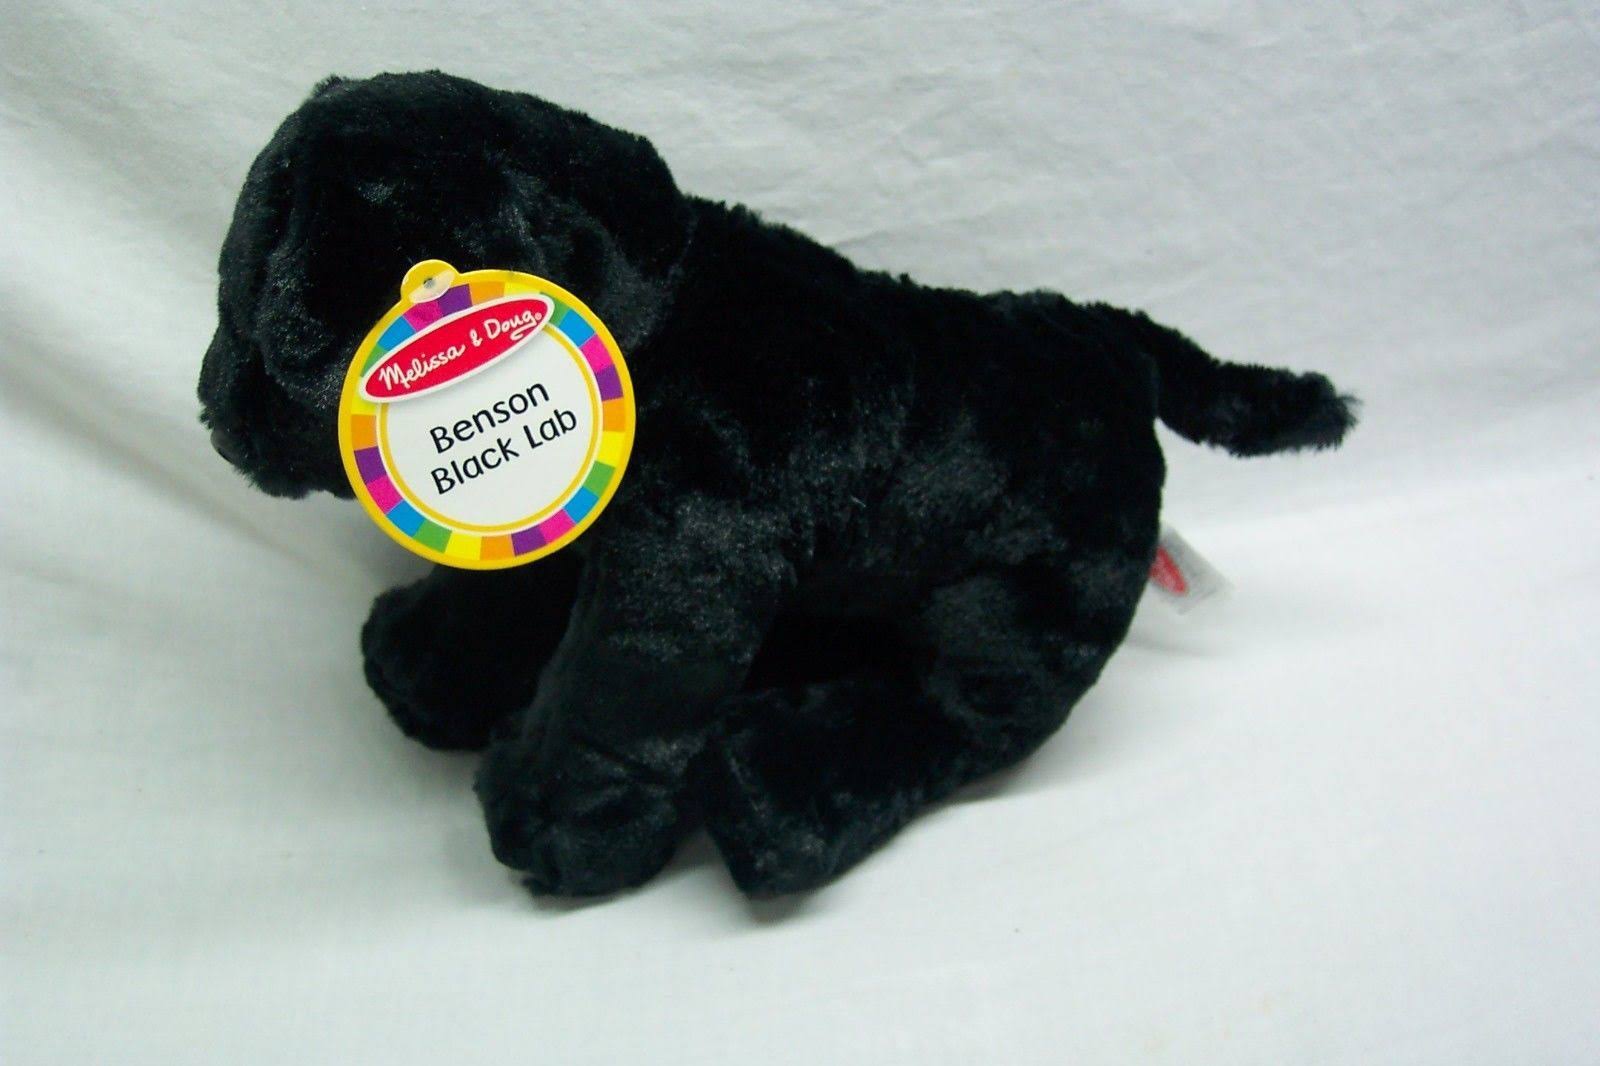 Melissa and Doug Stuffed Animal Puppy Dog - Benson Black Lab